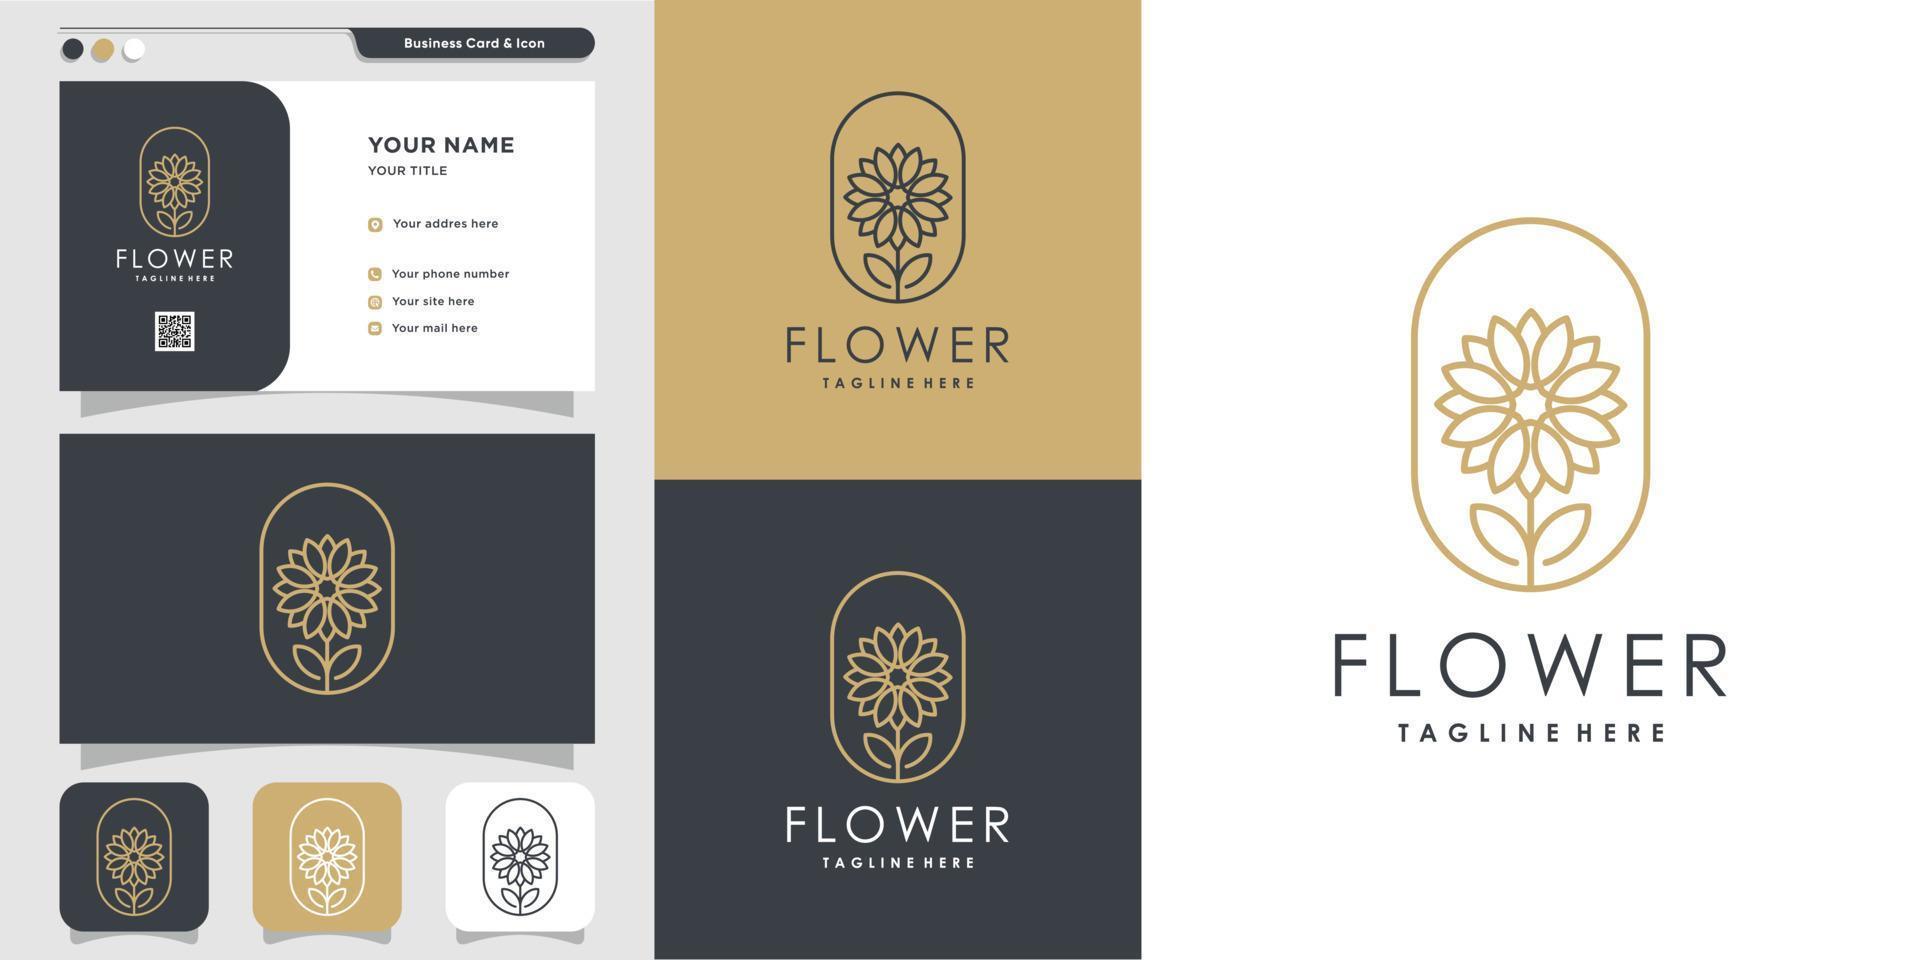 Beauty minimalist flower logo and business card design template Premium Vector